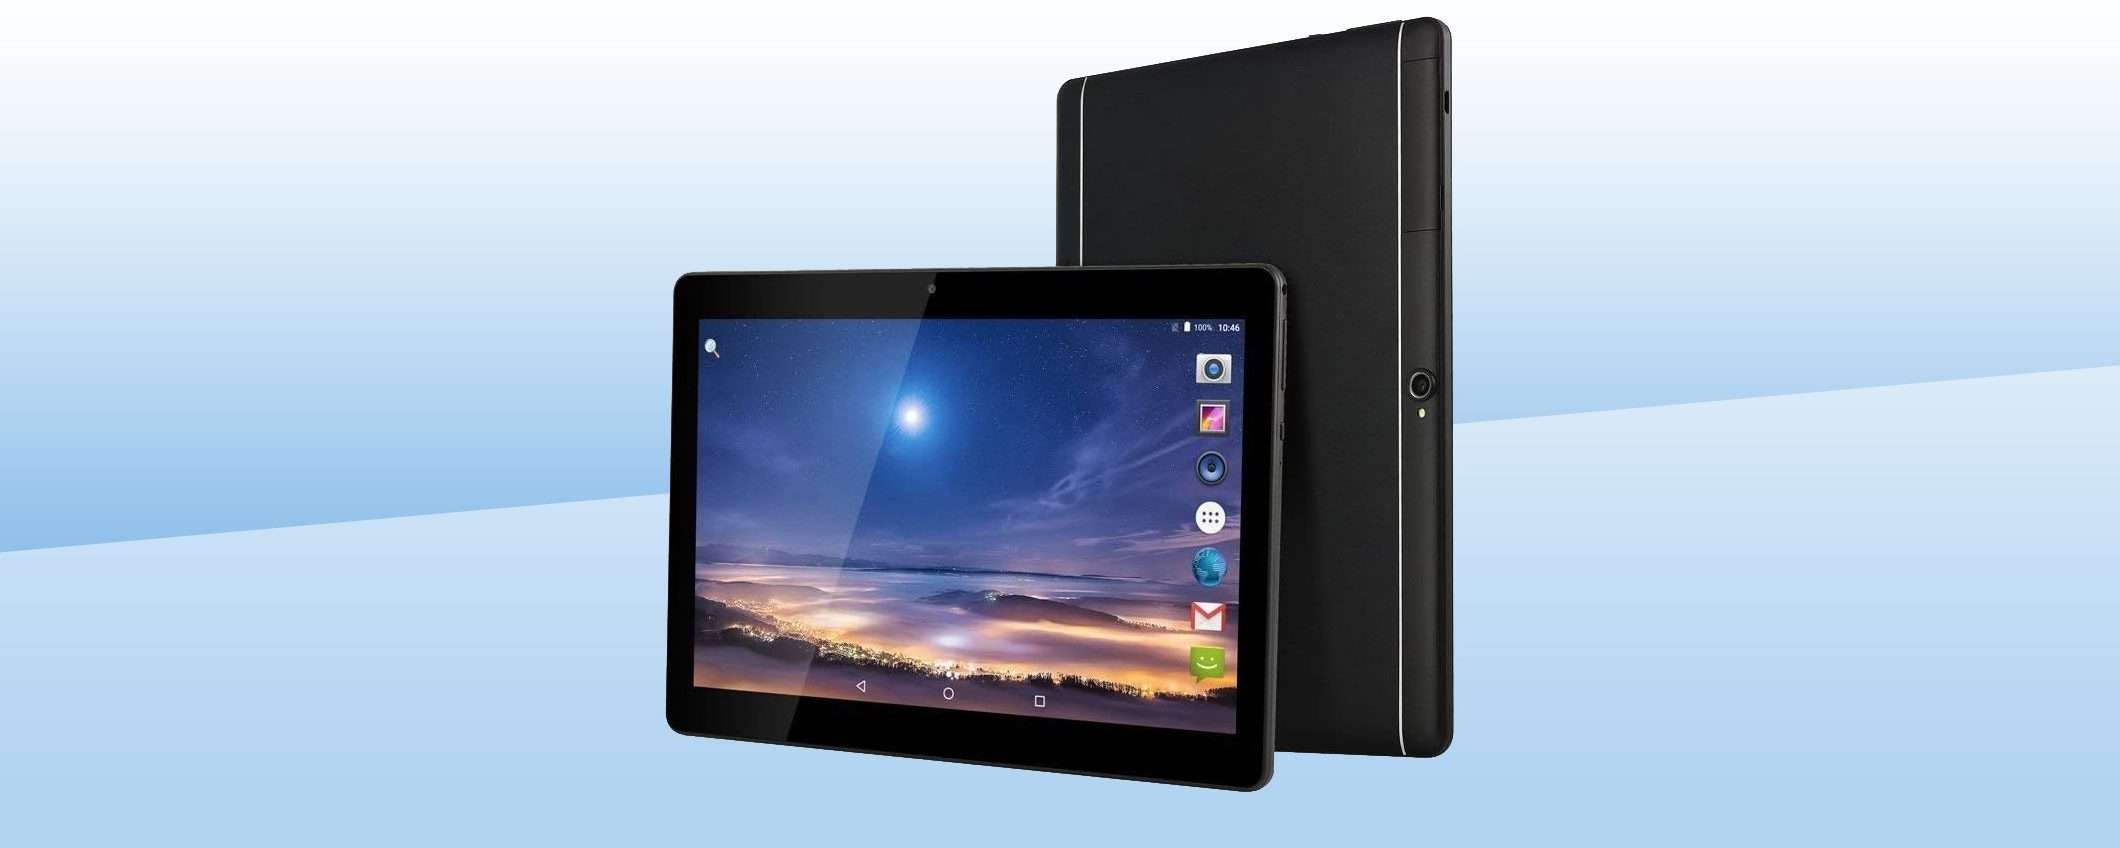 Tablet Android a 42 euro: OFFERTA LAMPO su Amazon